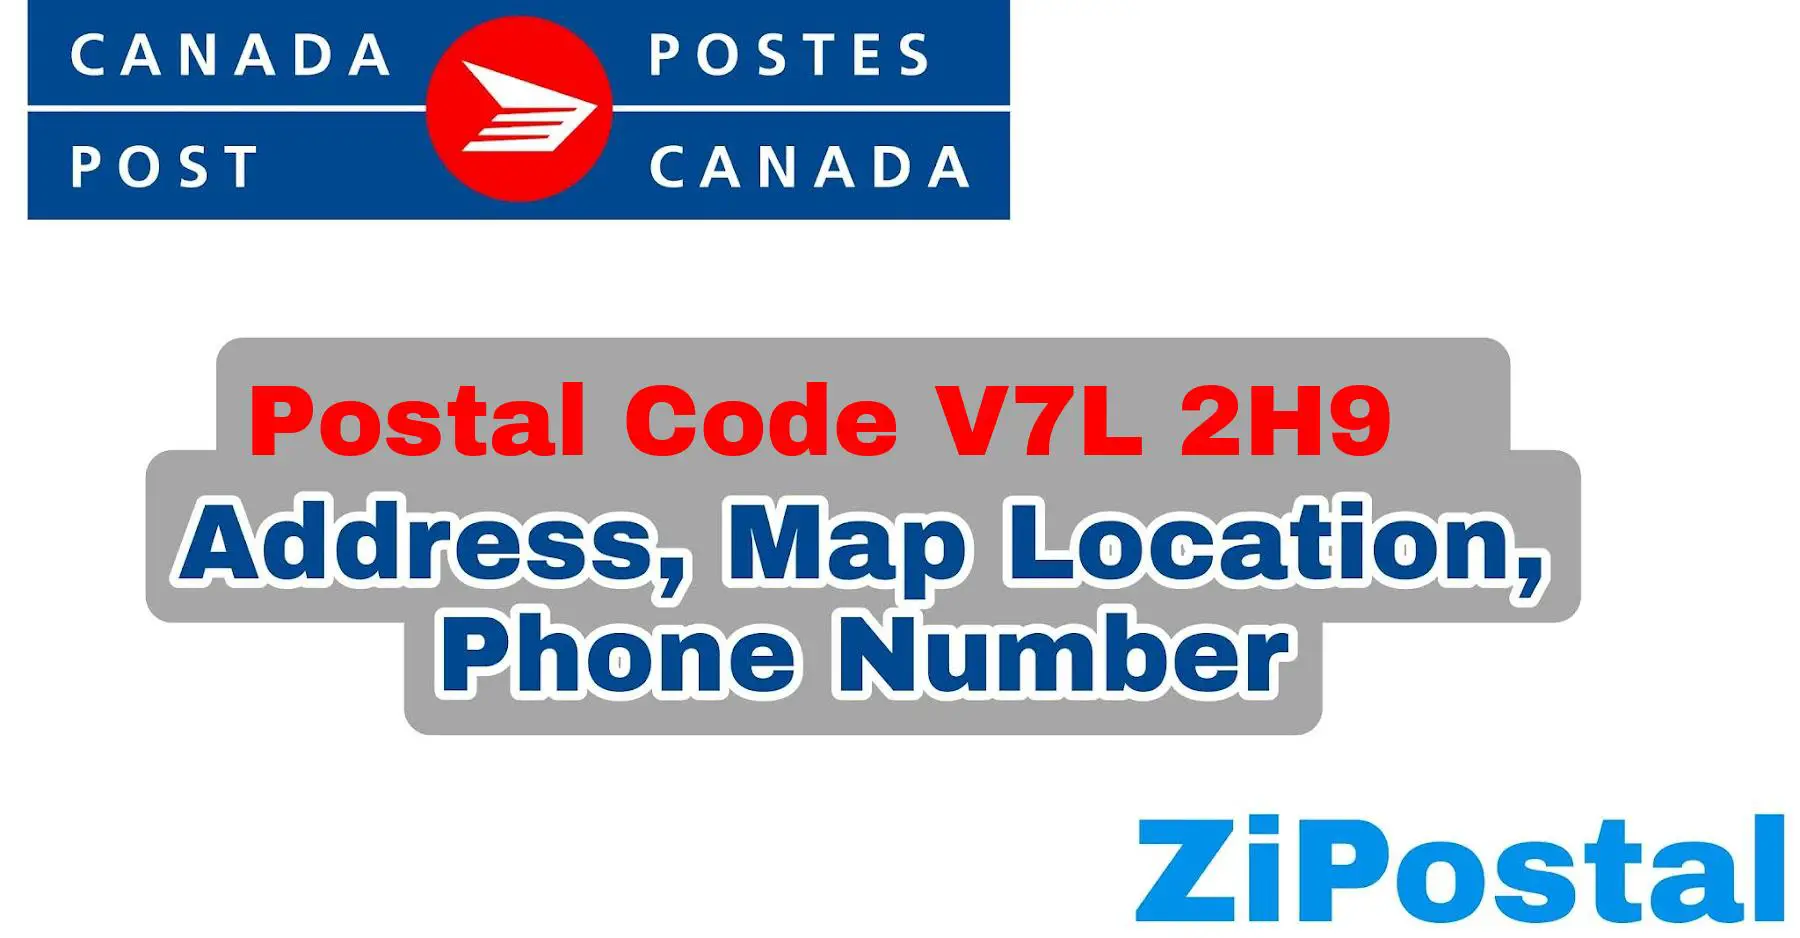 Postal Code V7L 2H9 Address Map Location and Phone Number